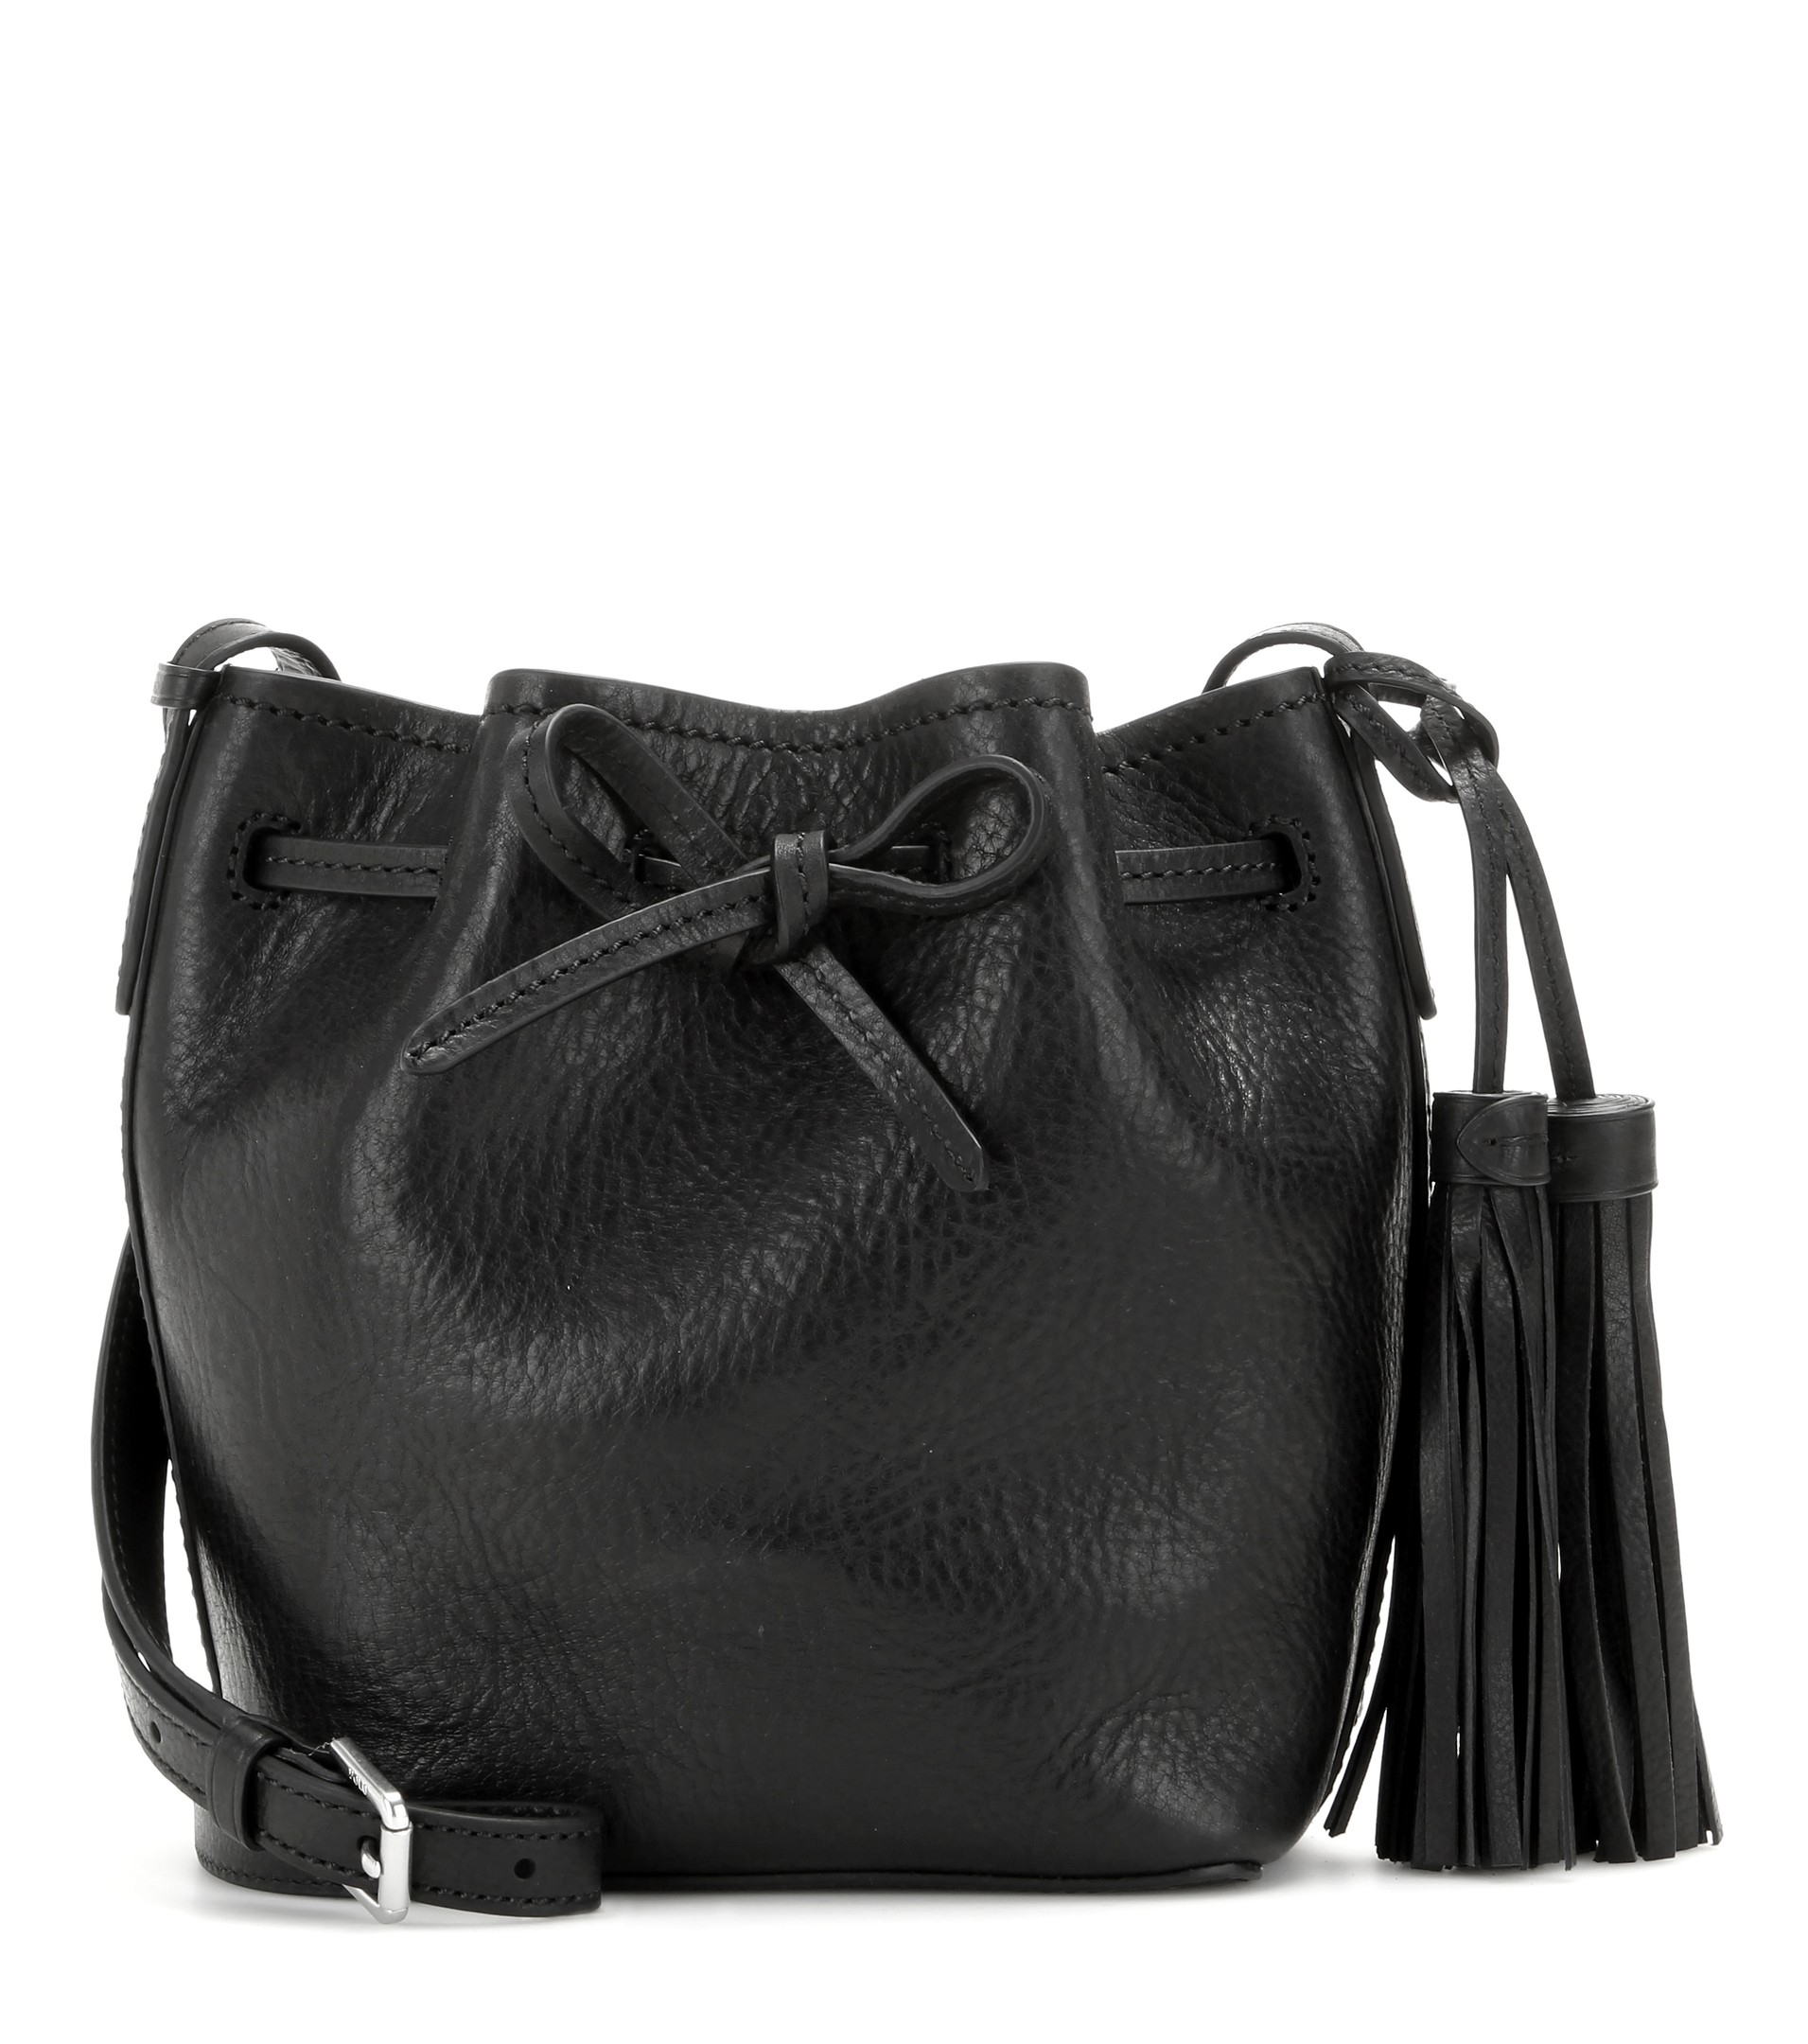 Polo Ralph Lauren Mini Bucket Leather Shoulder Bag in Black - Lyst